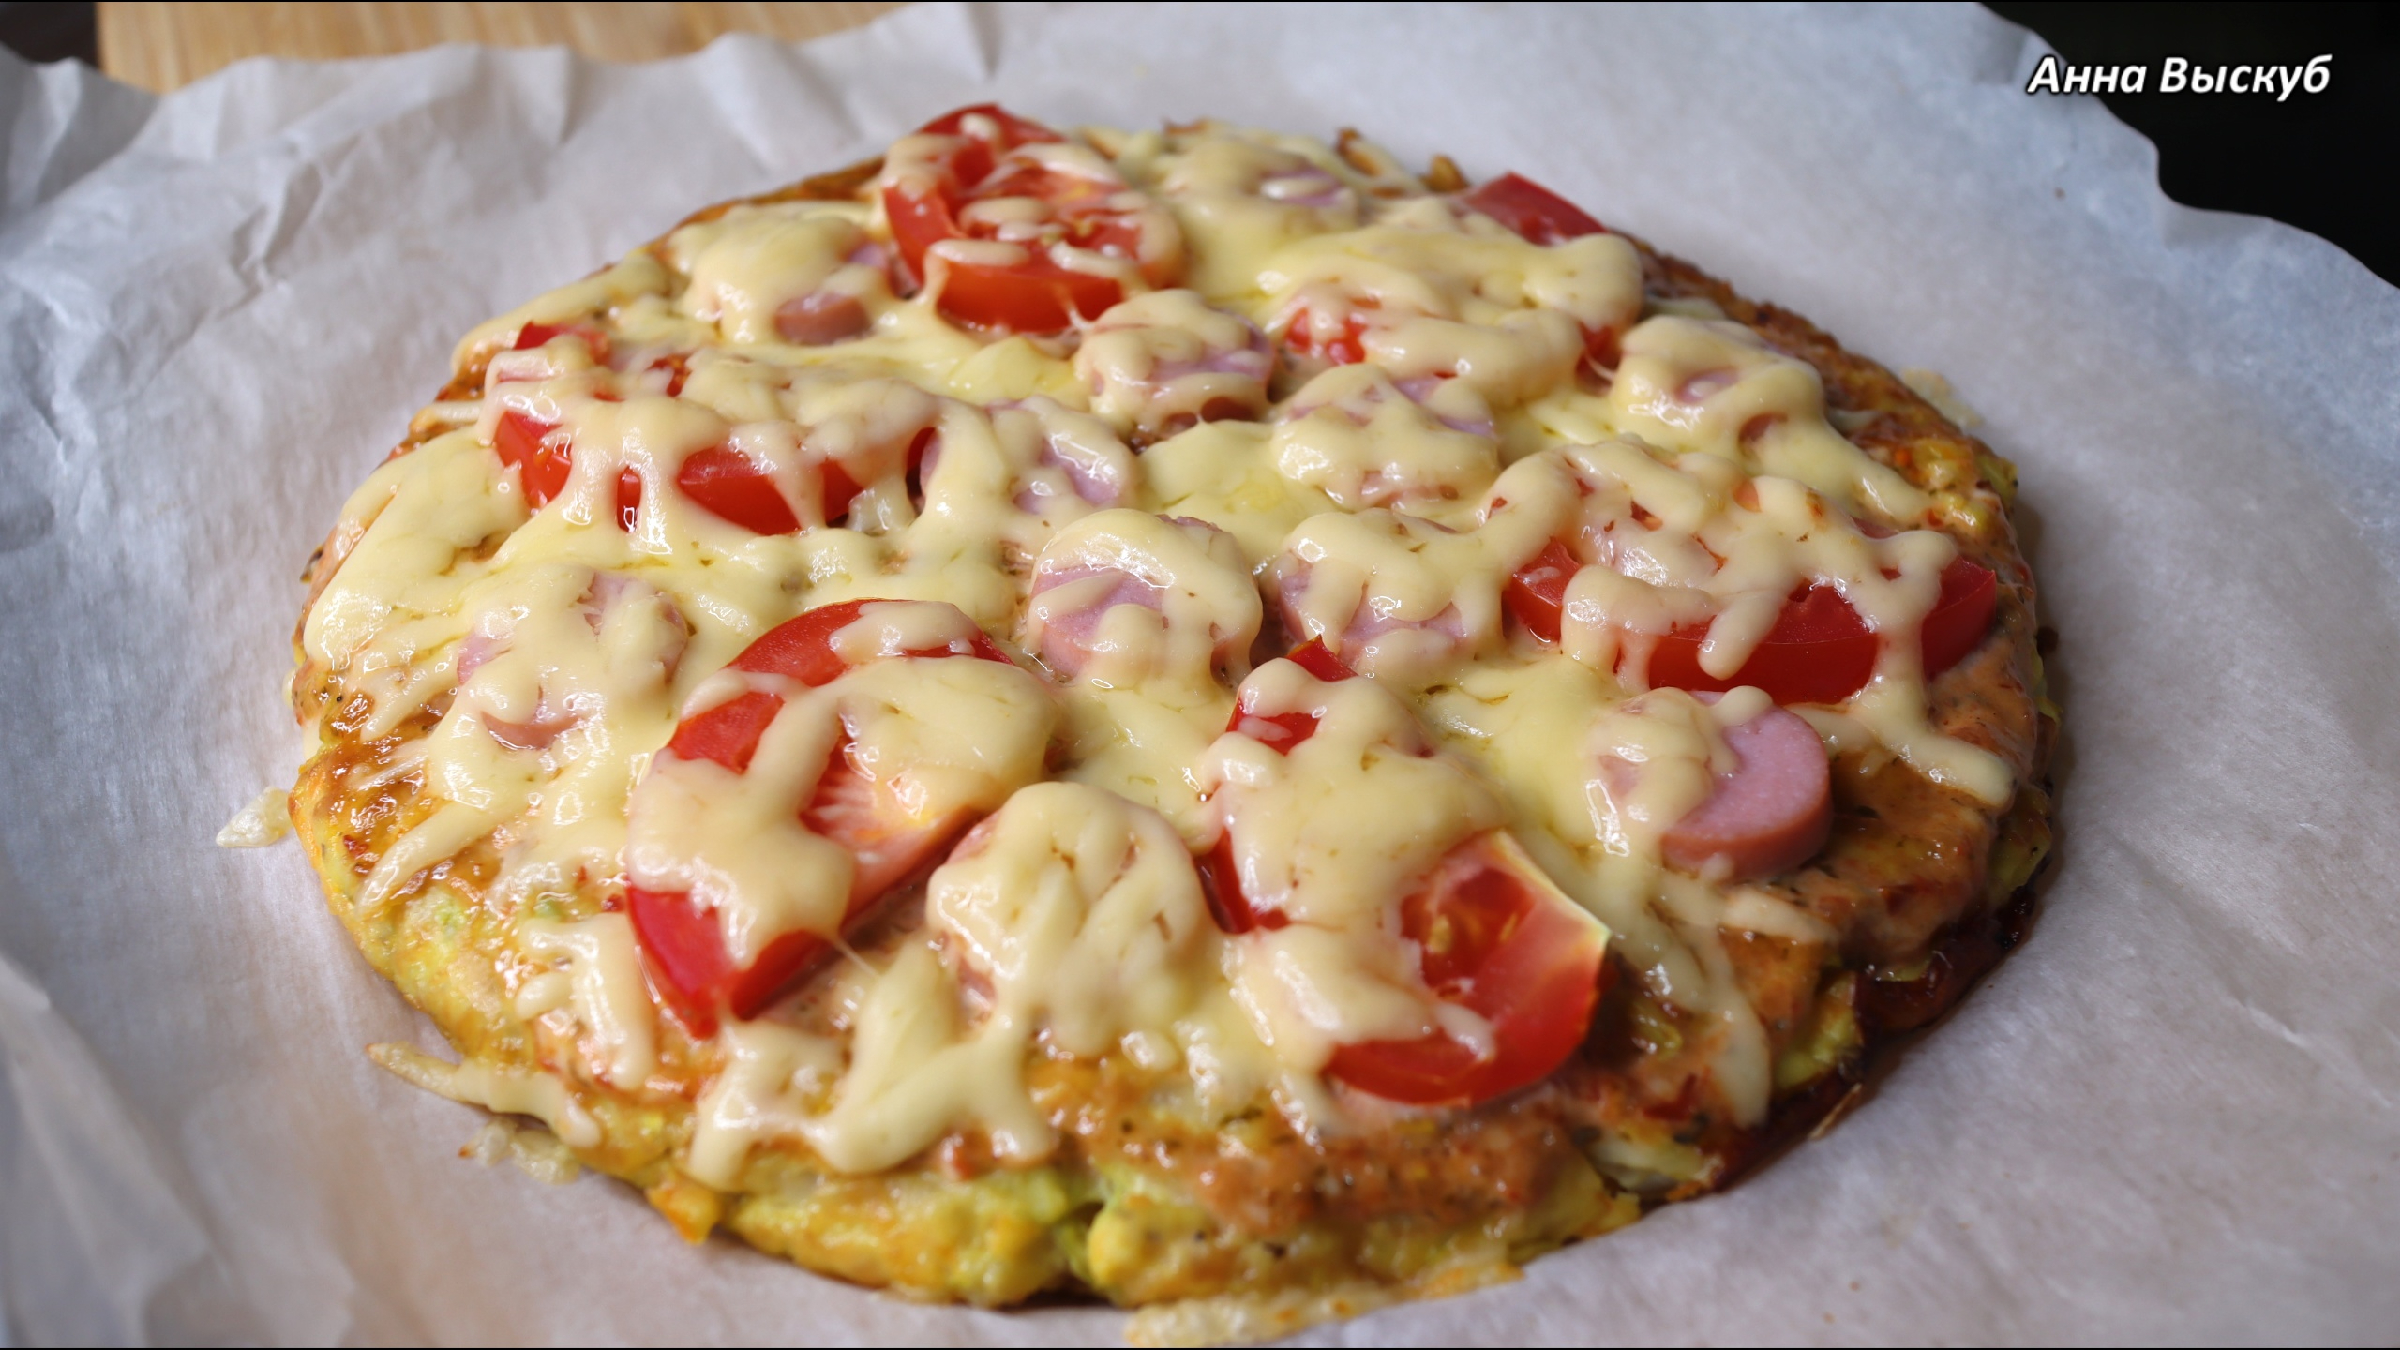 ольга шобутинская рецепты на ютубе пицца фото 53